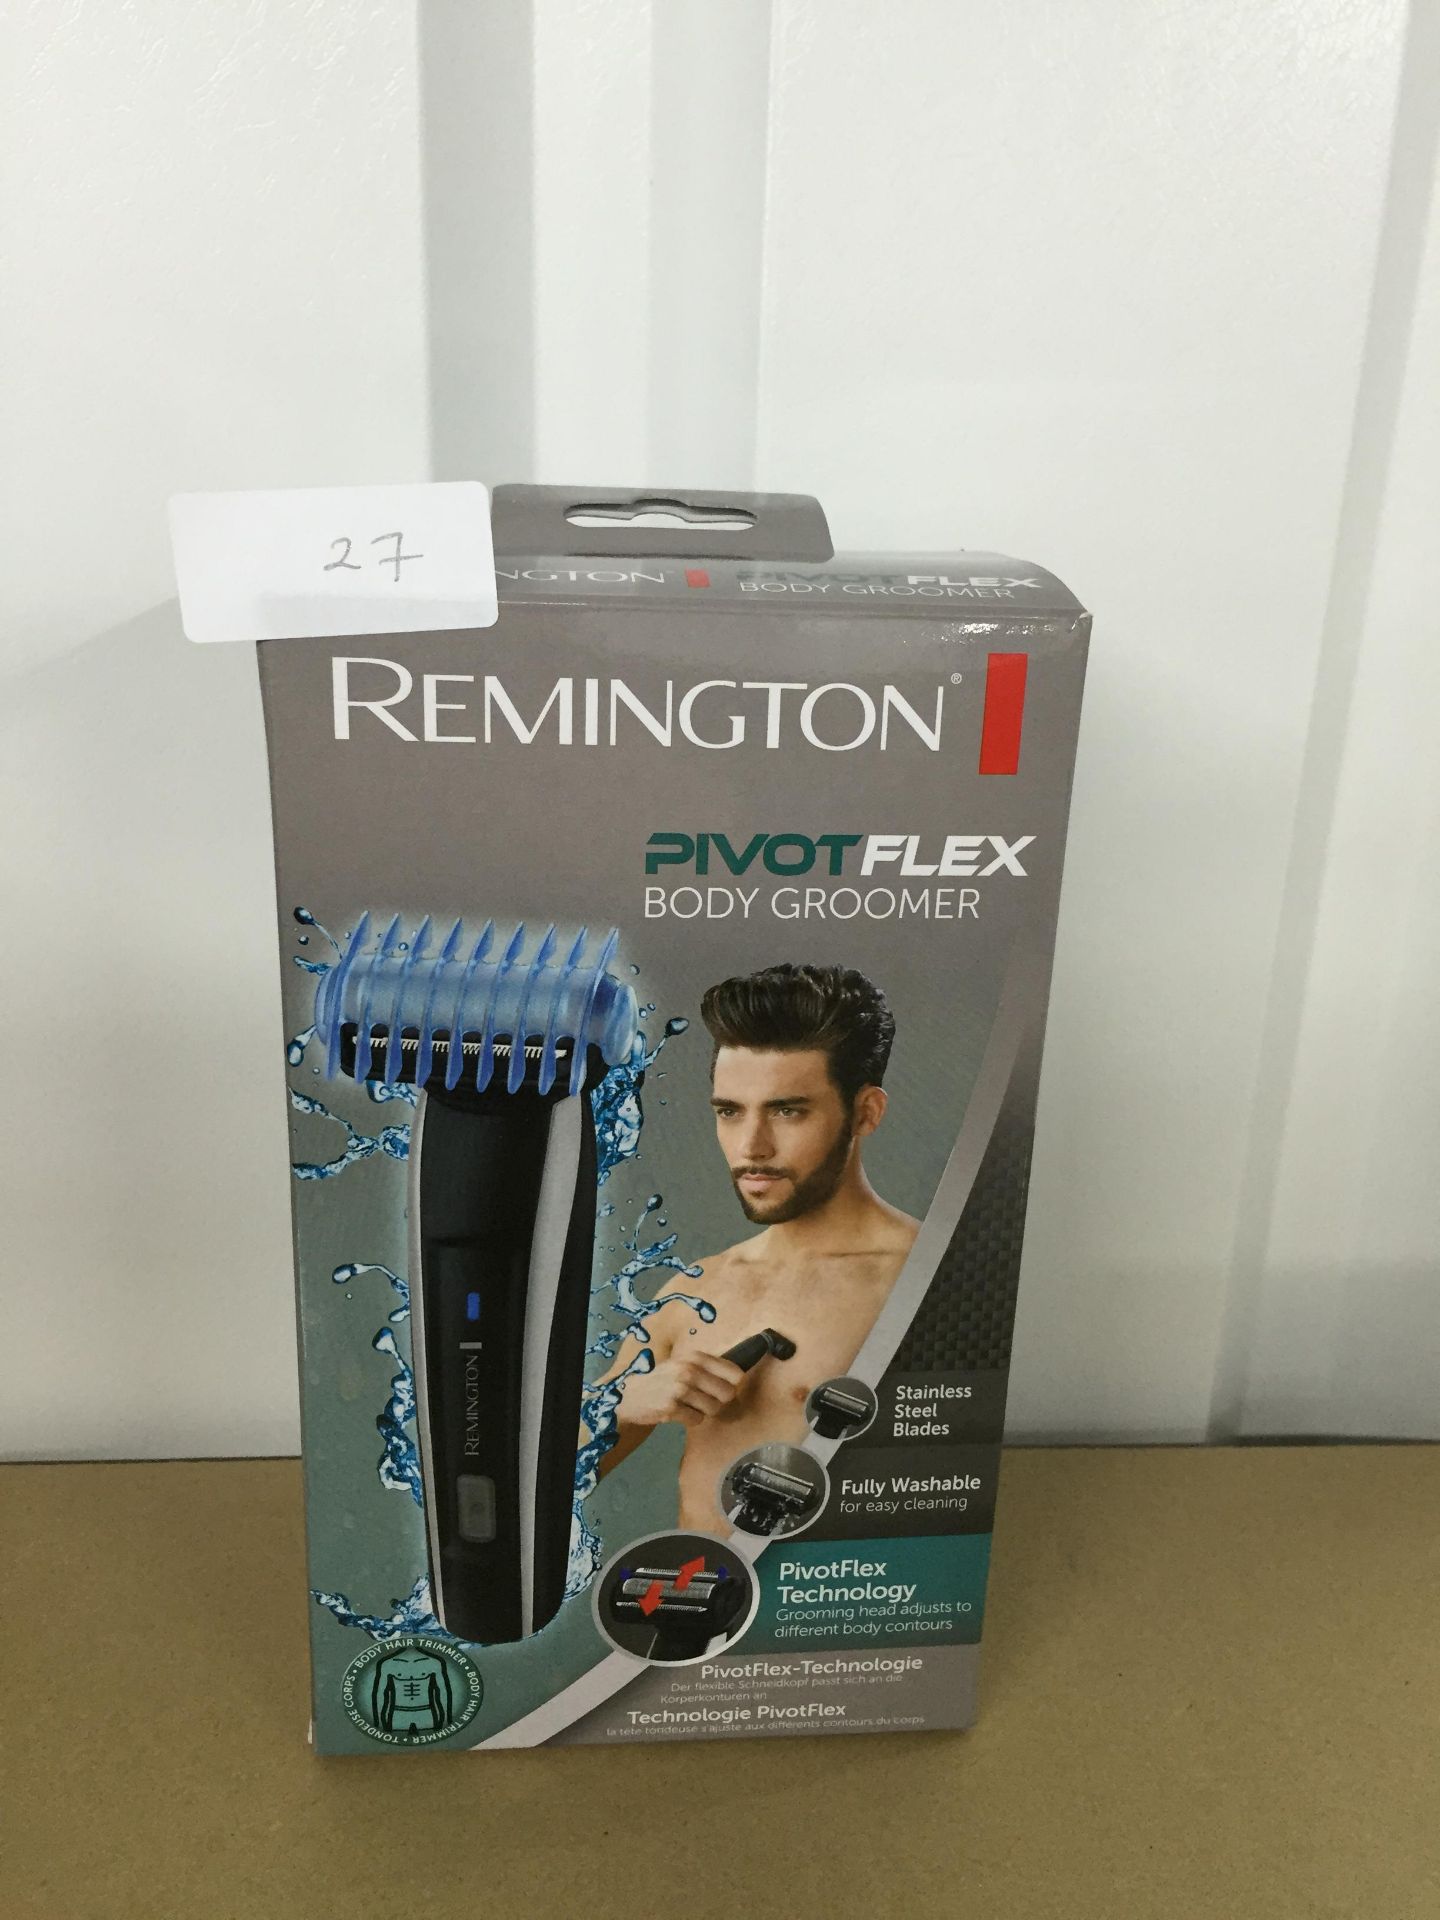 Remington Pivot Flex body groomer